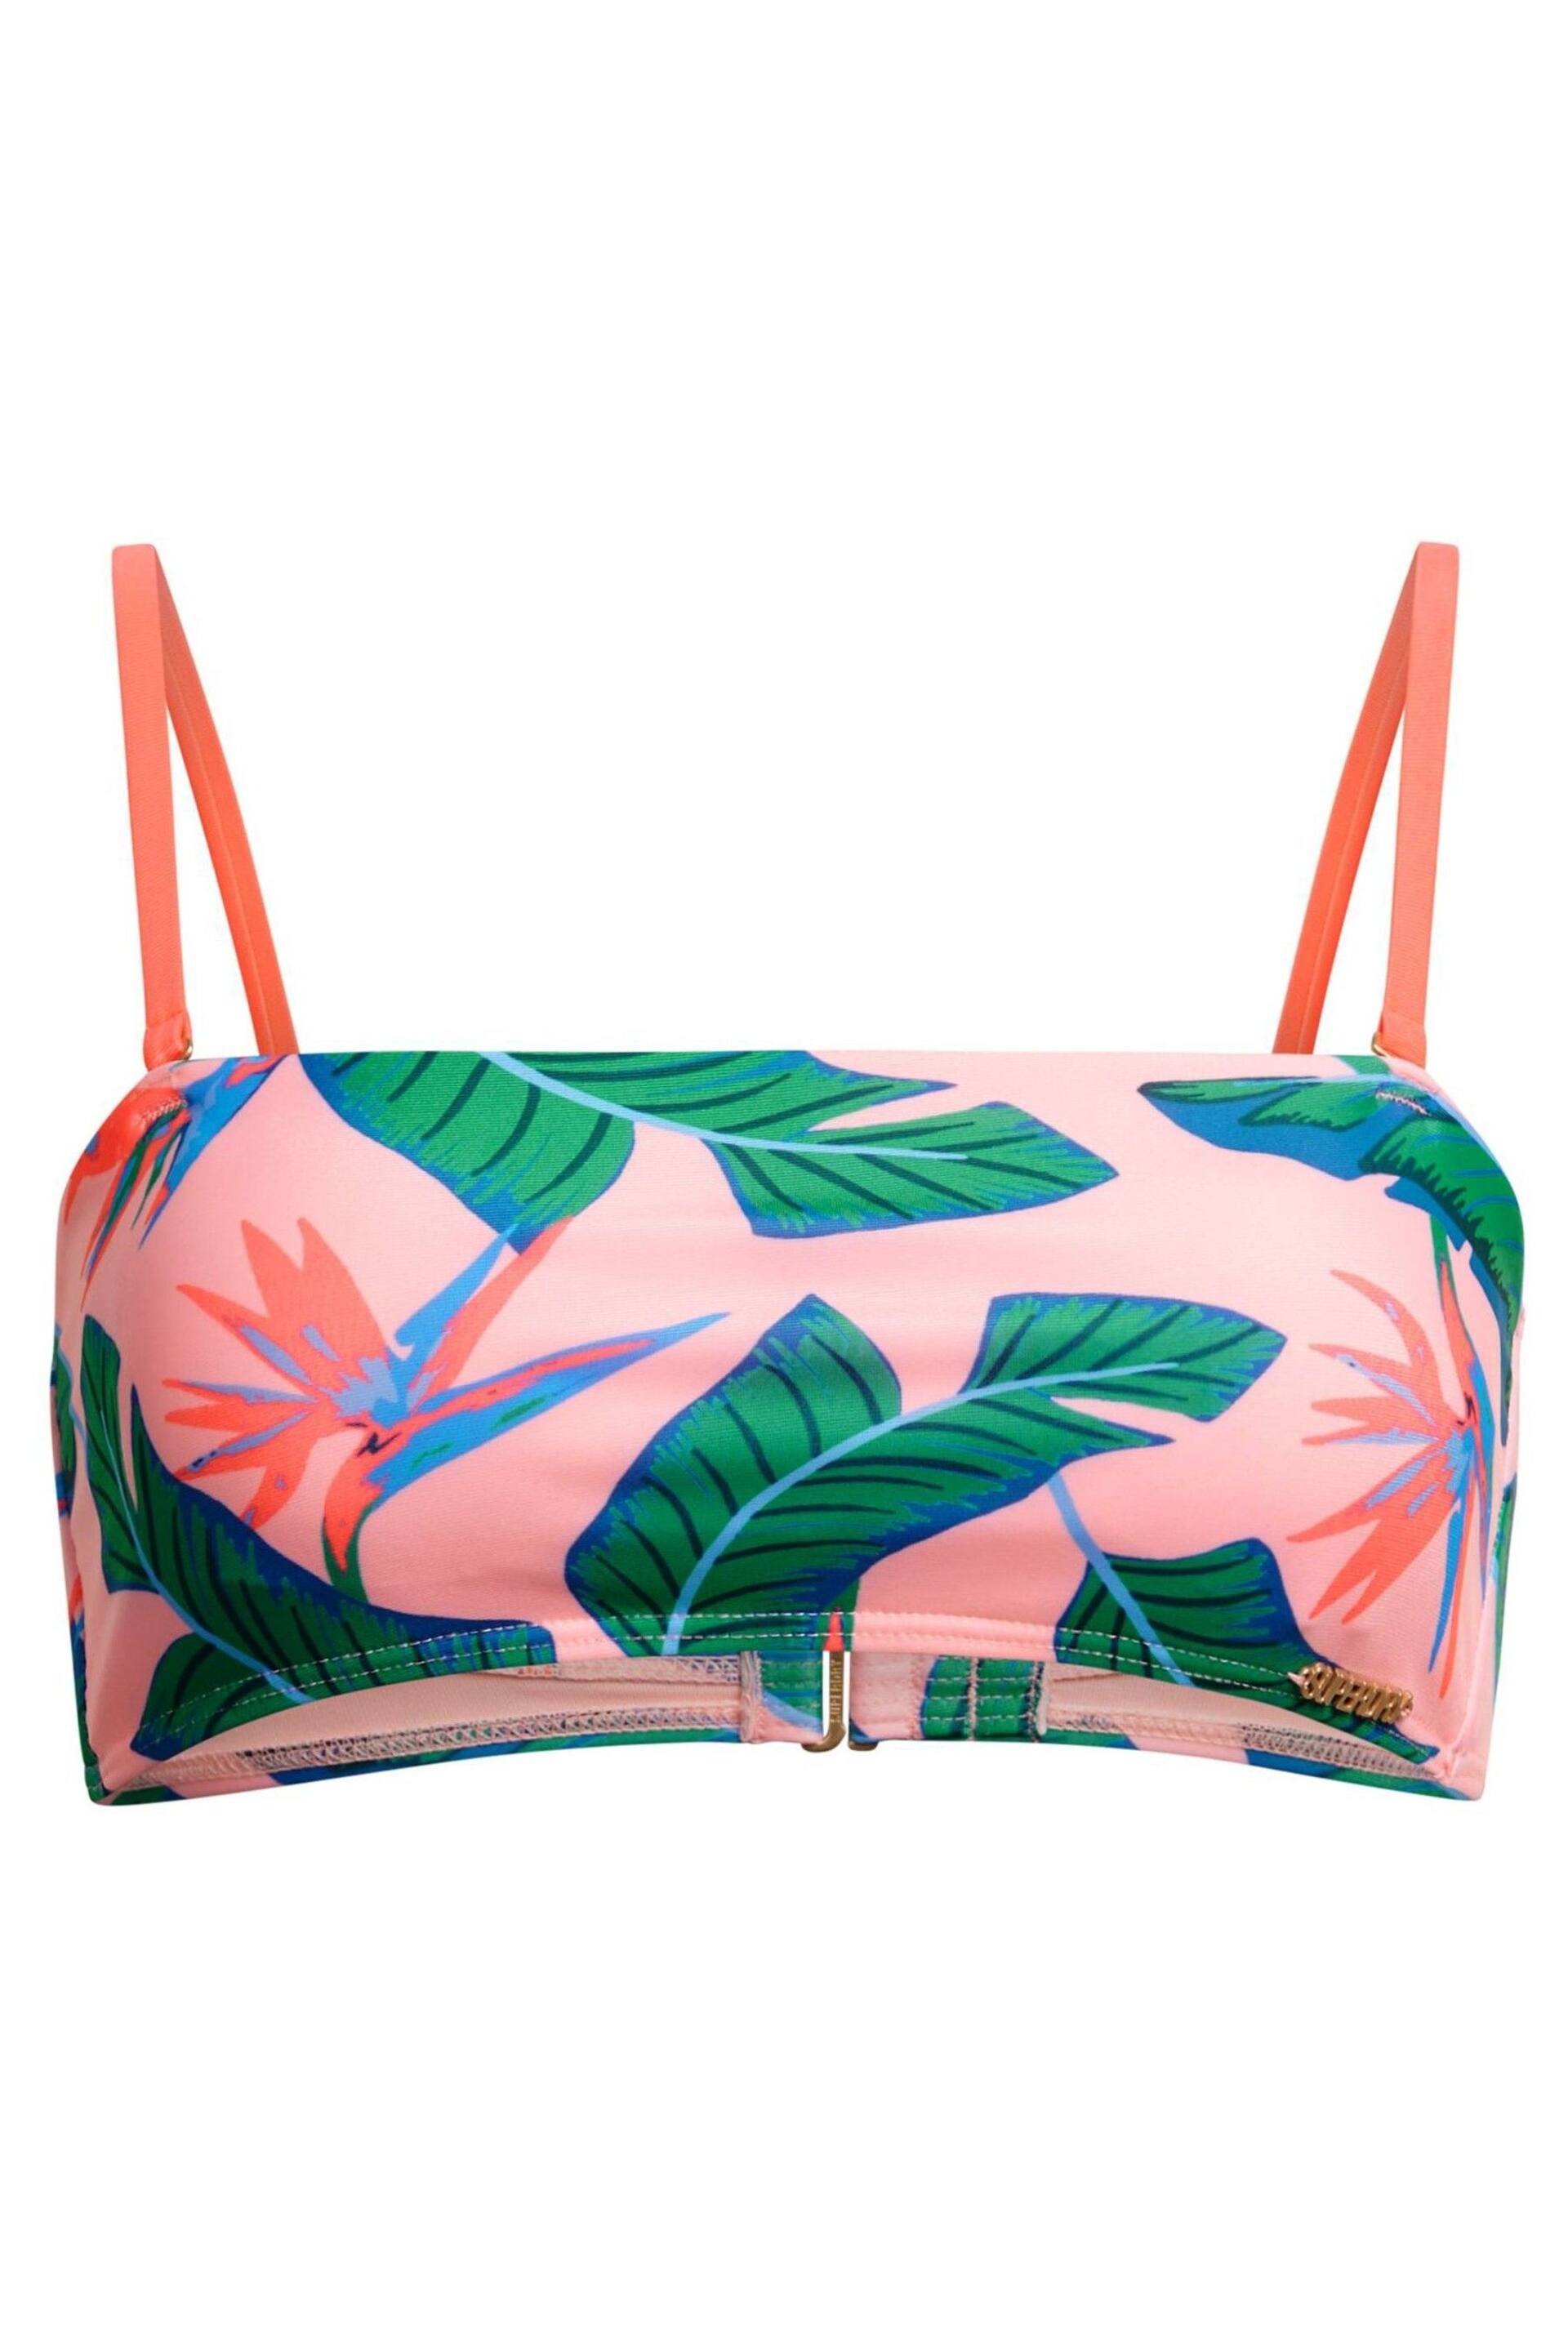 Superdry Pink Tropical Bandeau Bikini Top - Image 7 of 7